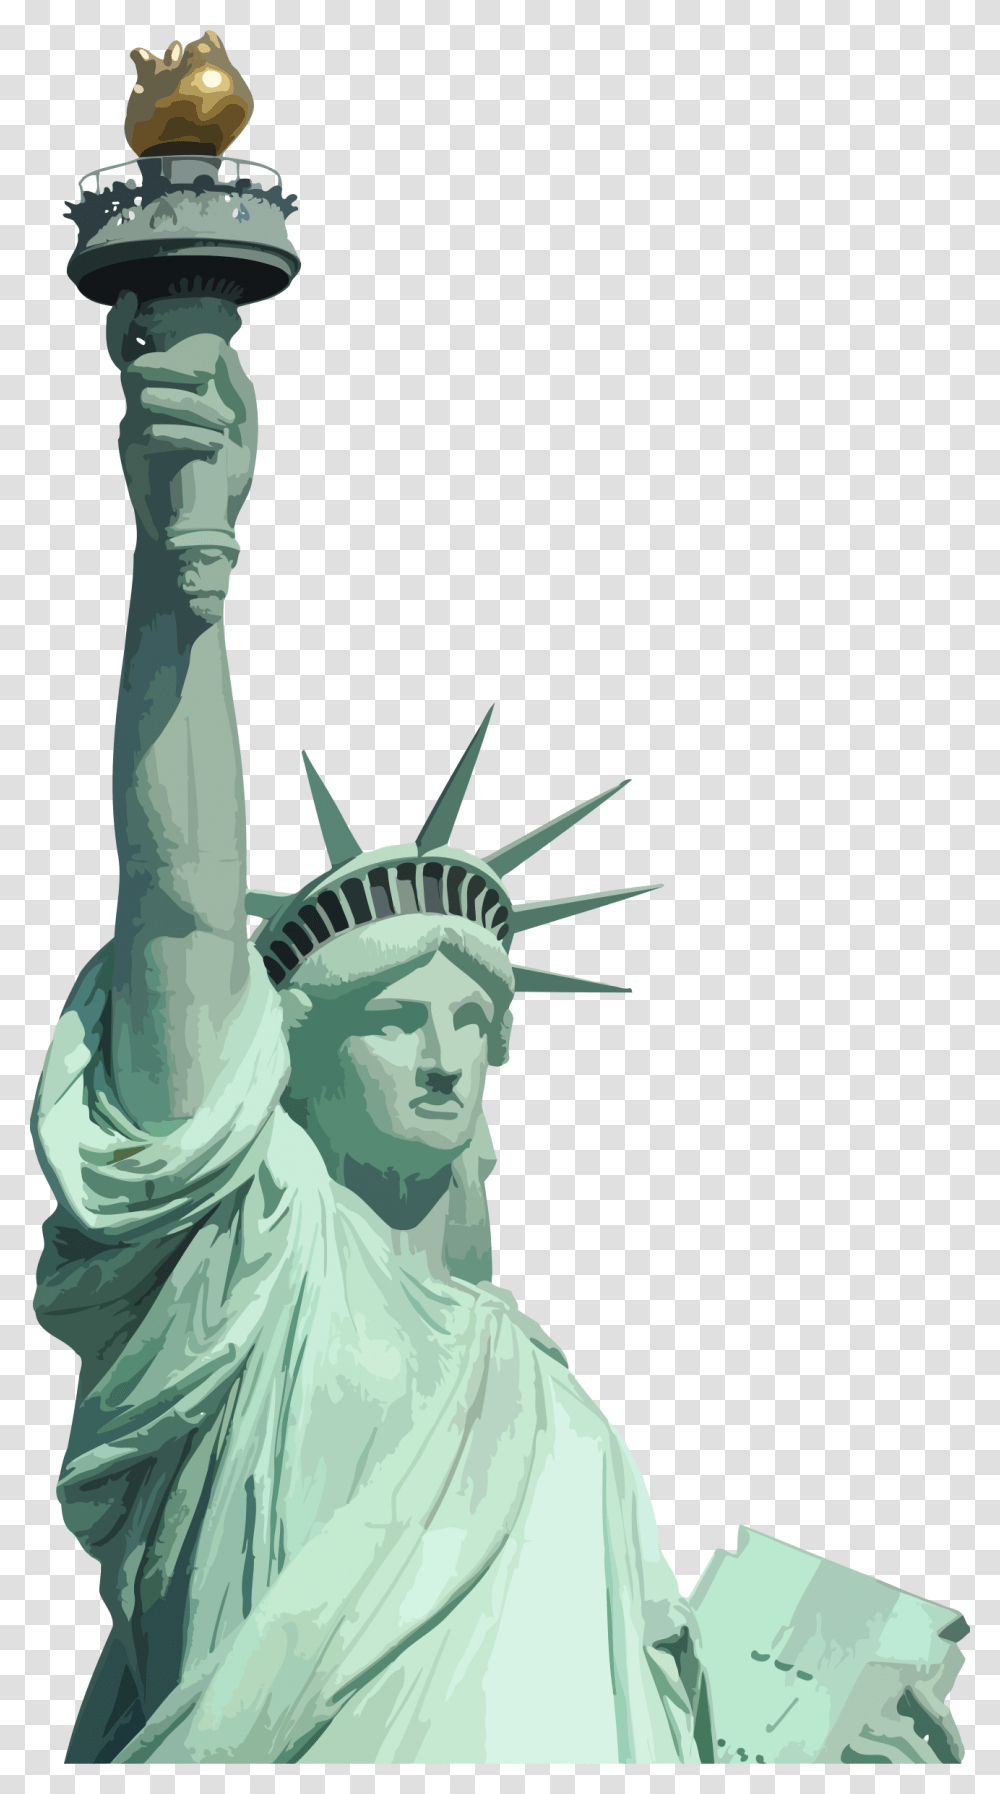 Statue Of Liberty Clip Art Statue Of Liberty Pdf, Sculpture, Person, Outdoors, Nature Transparent Png